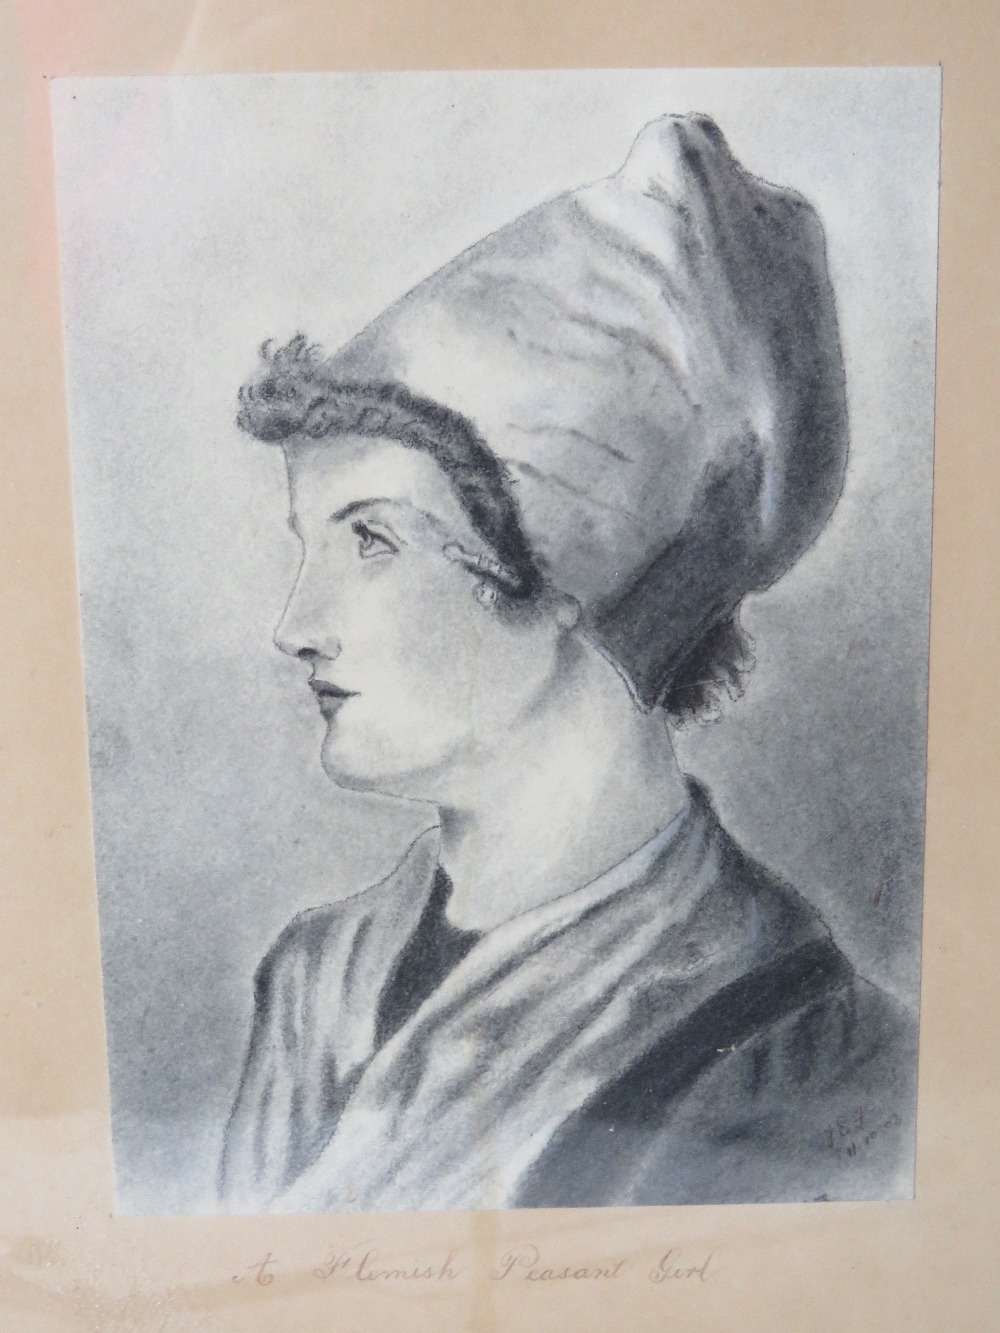 A portrait print titled 'A Flemish Peasant Girl', framed and glazed. - Image 3 of 3